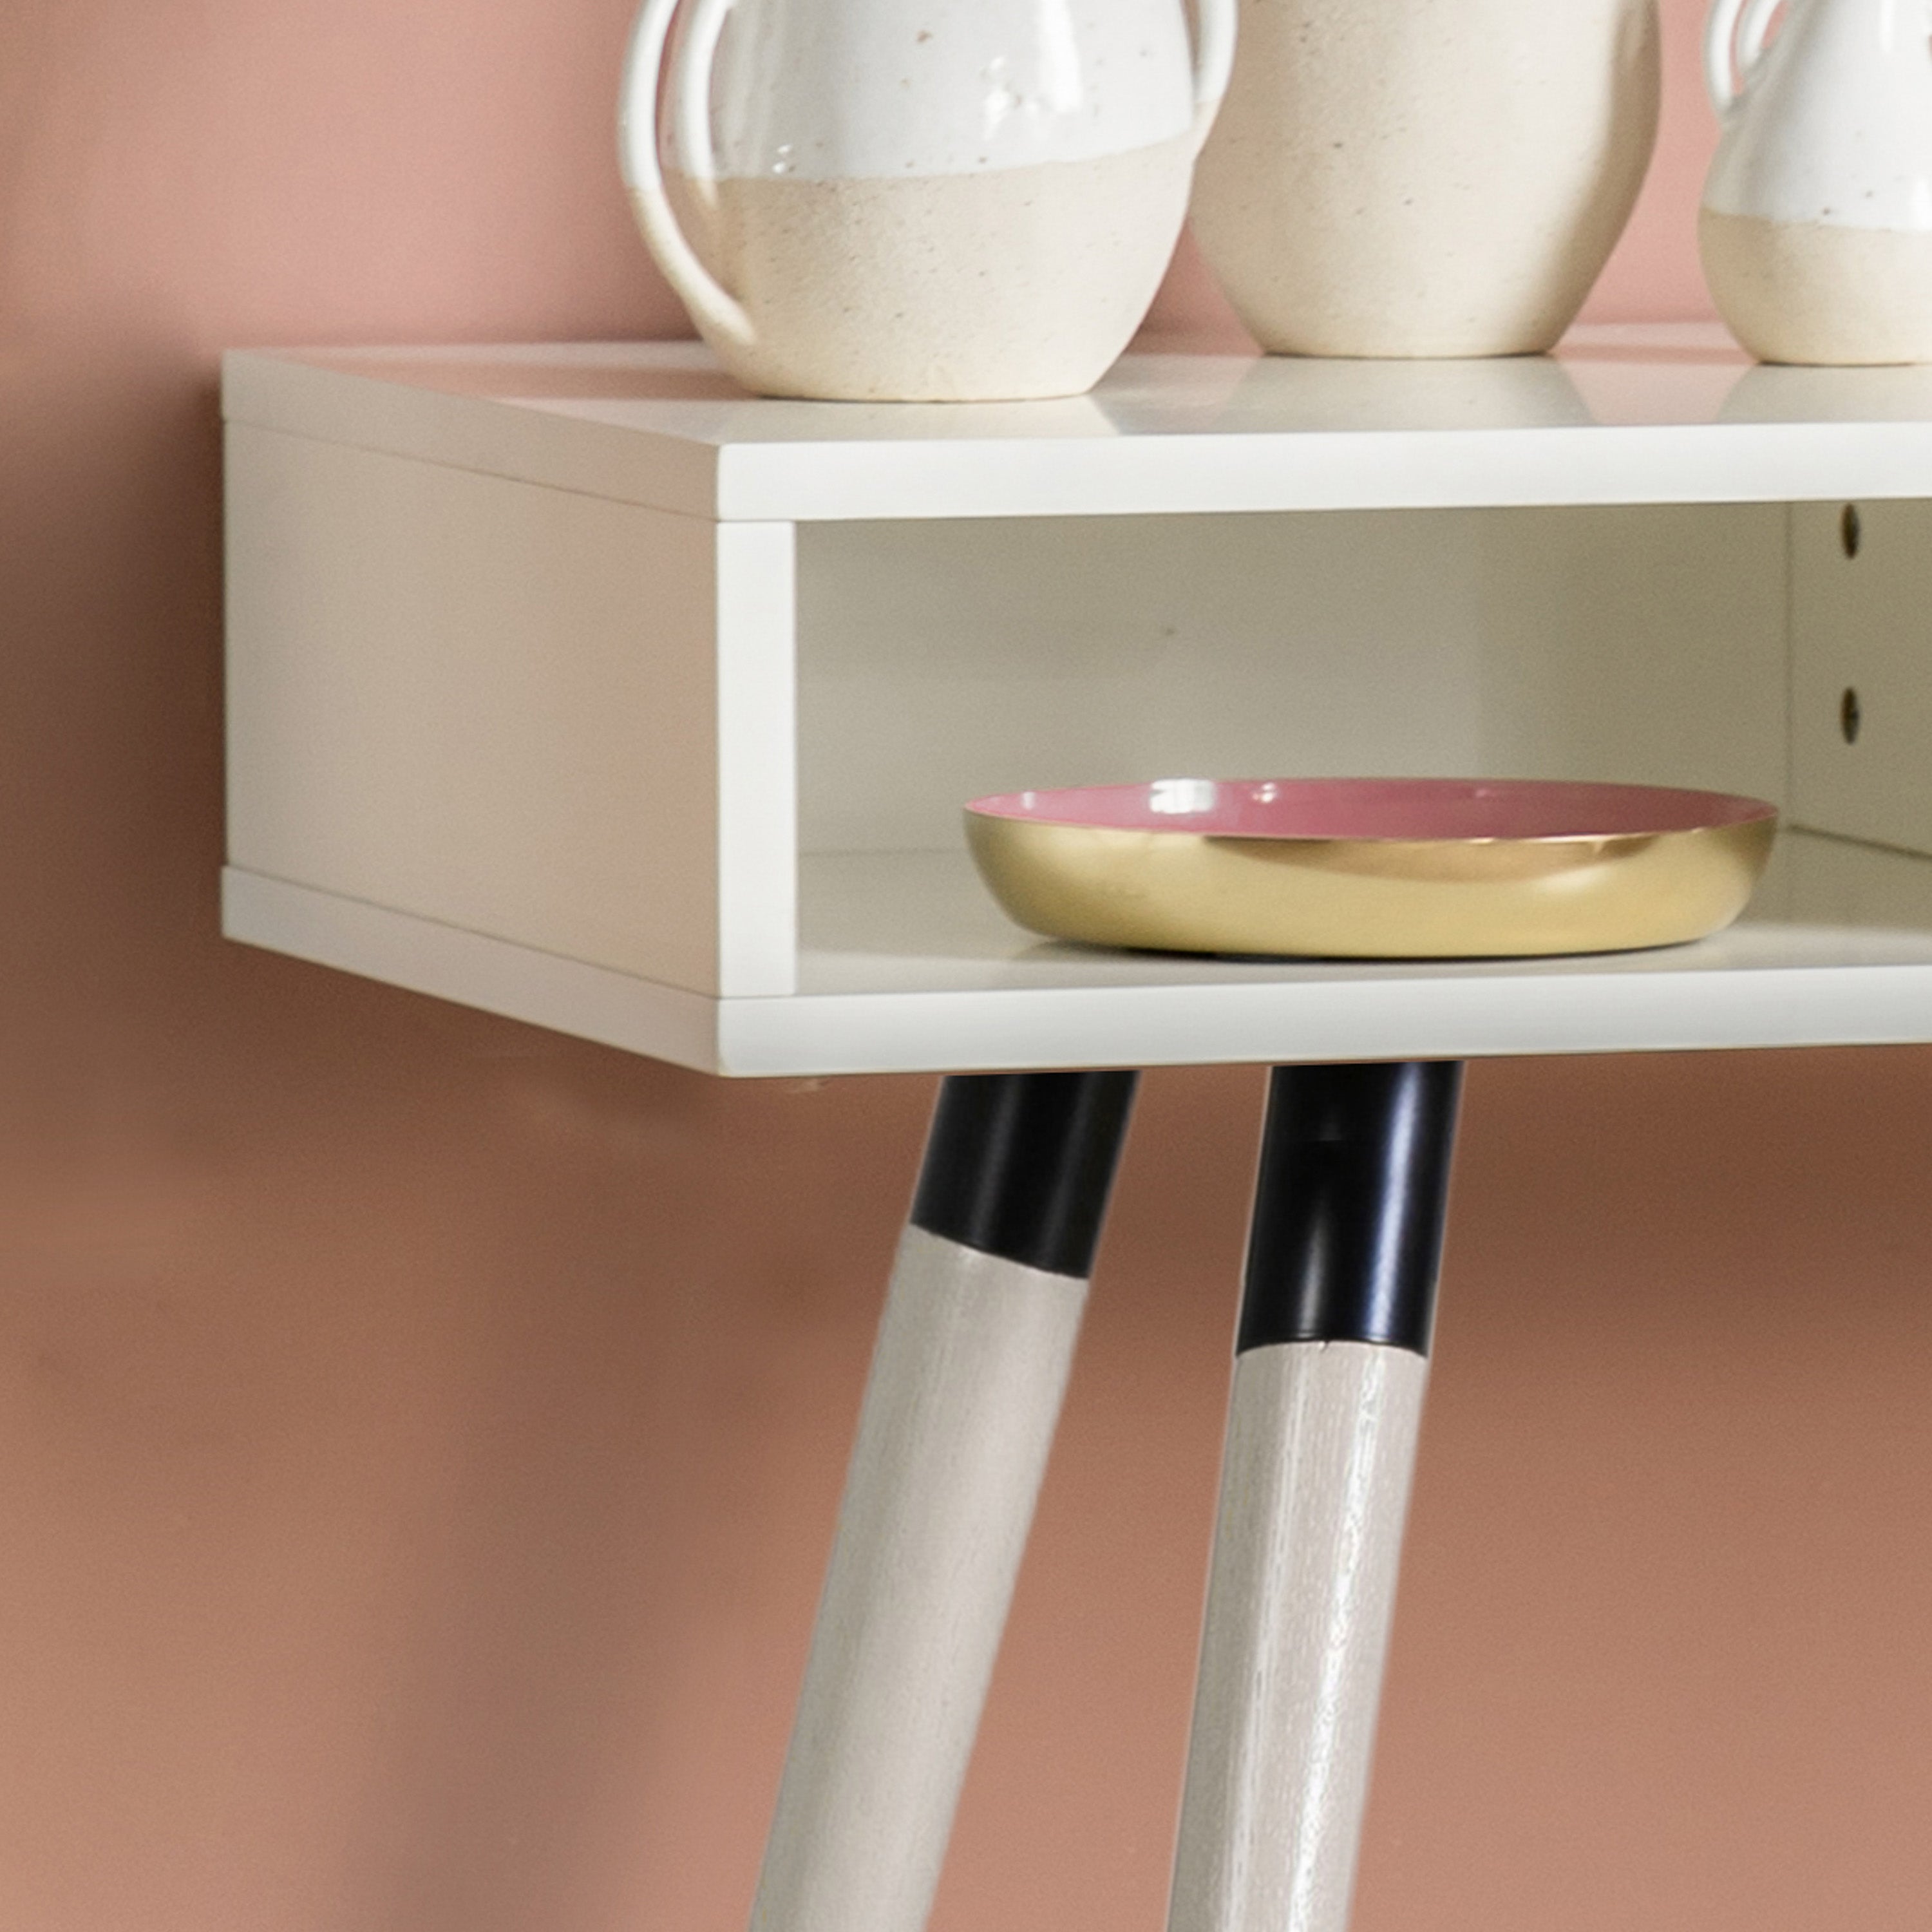 Evissa white console table with brass socks and adjustable feet | malletandplane.com